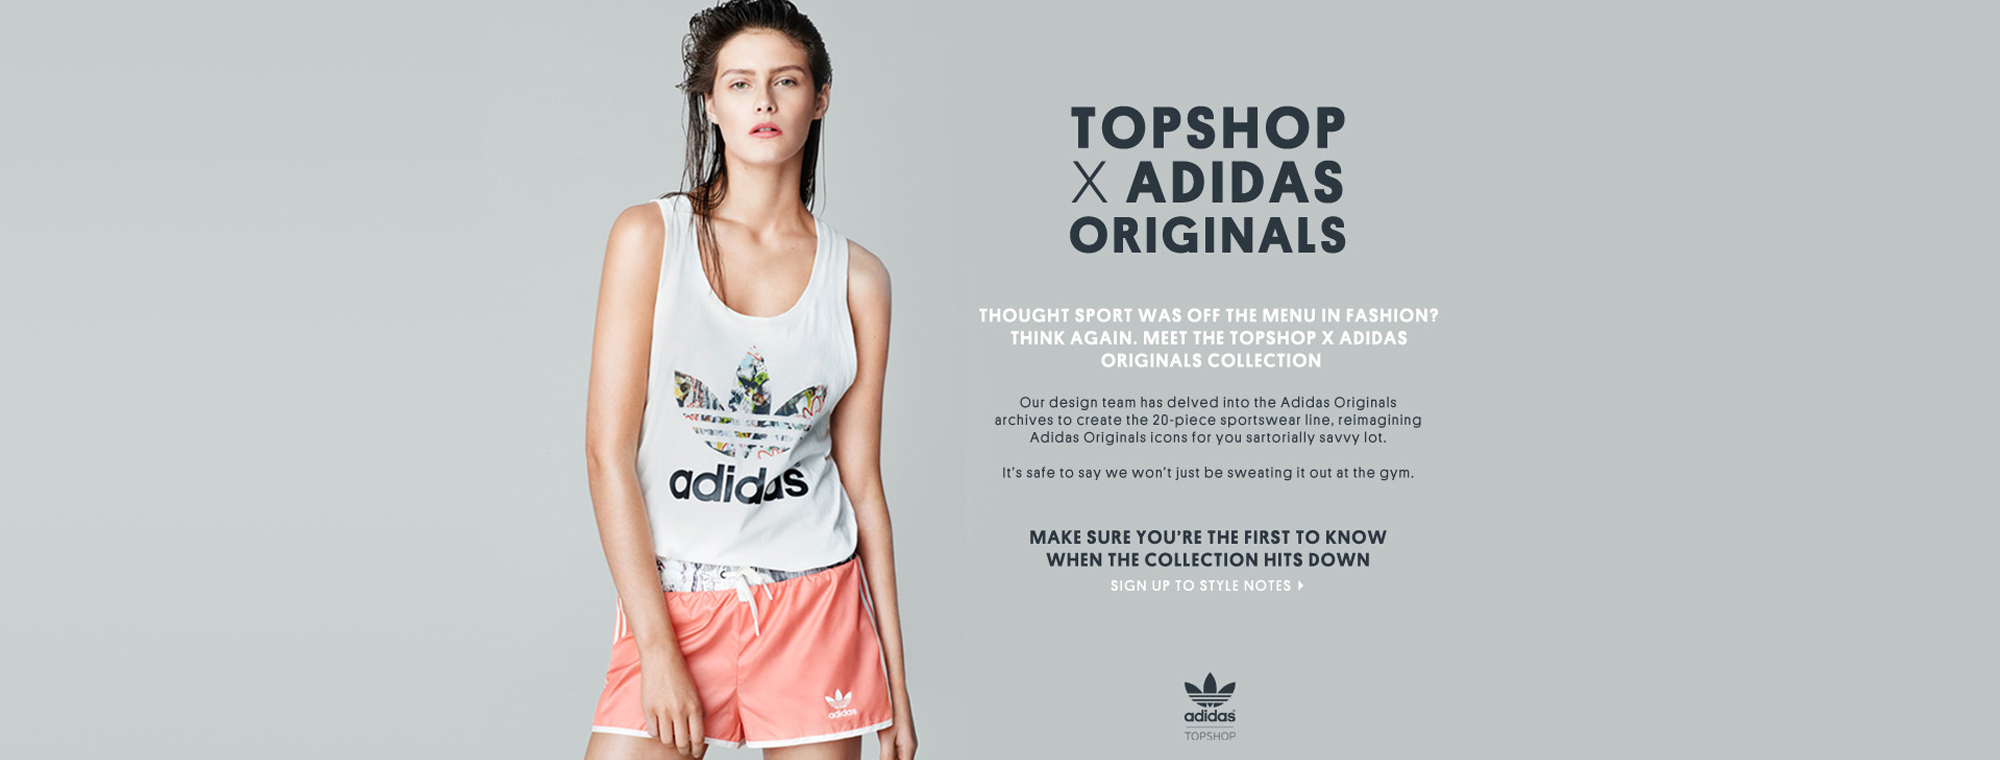 Adidas-Originals-Top-Shop-Header2